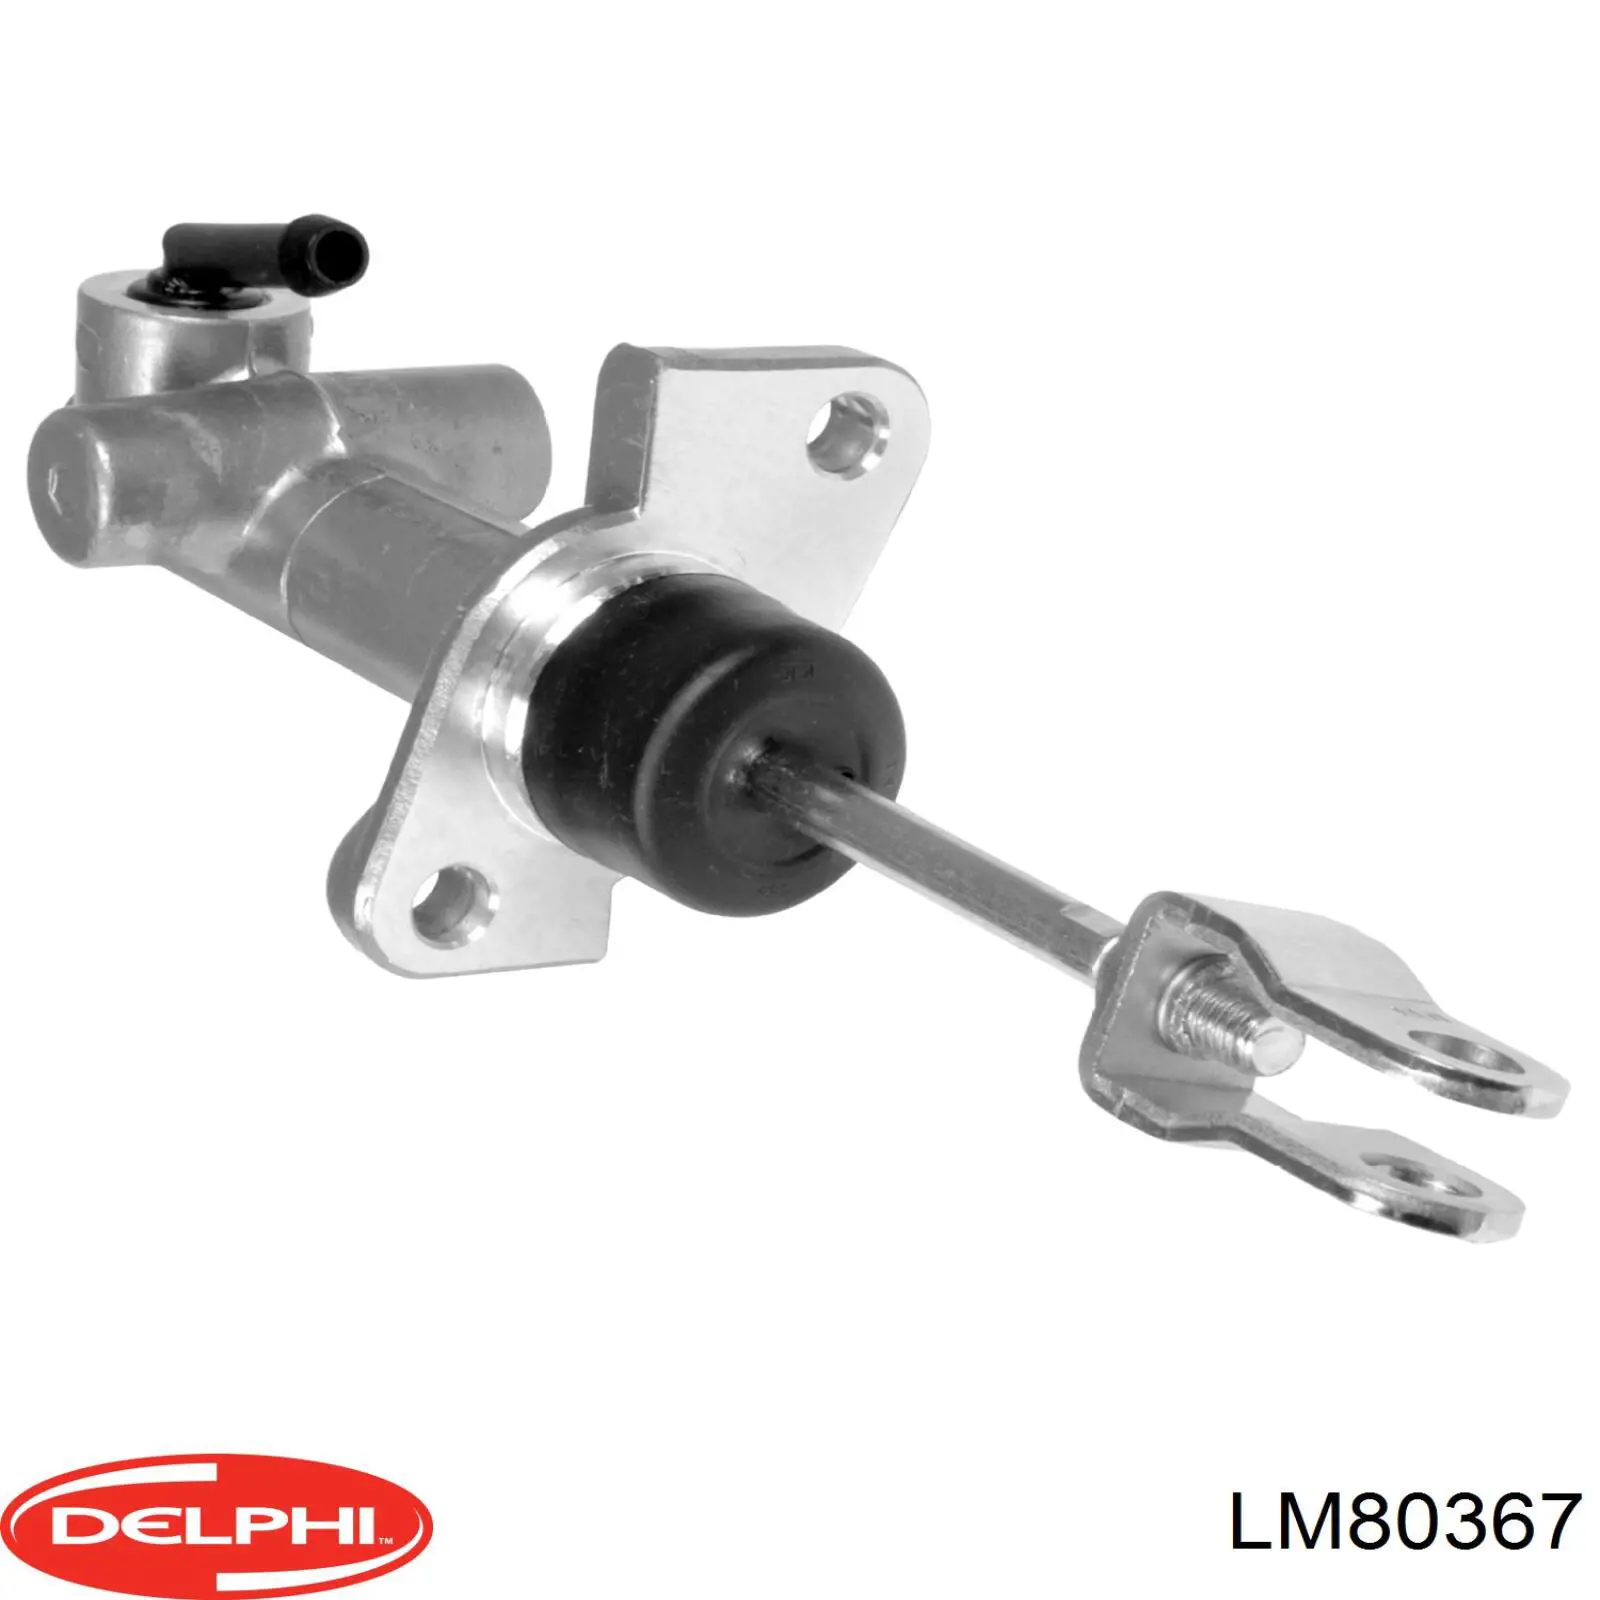 LM80367 Delphi cilindro maestro de embrague